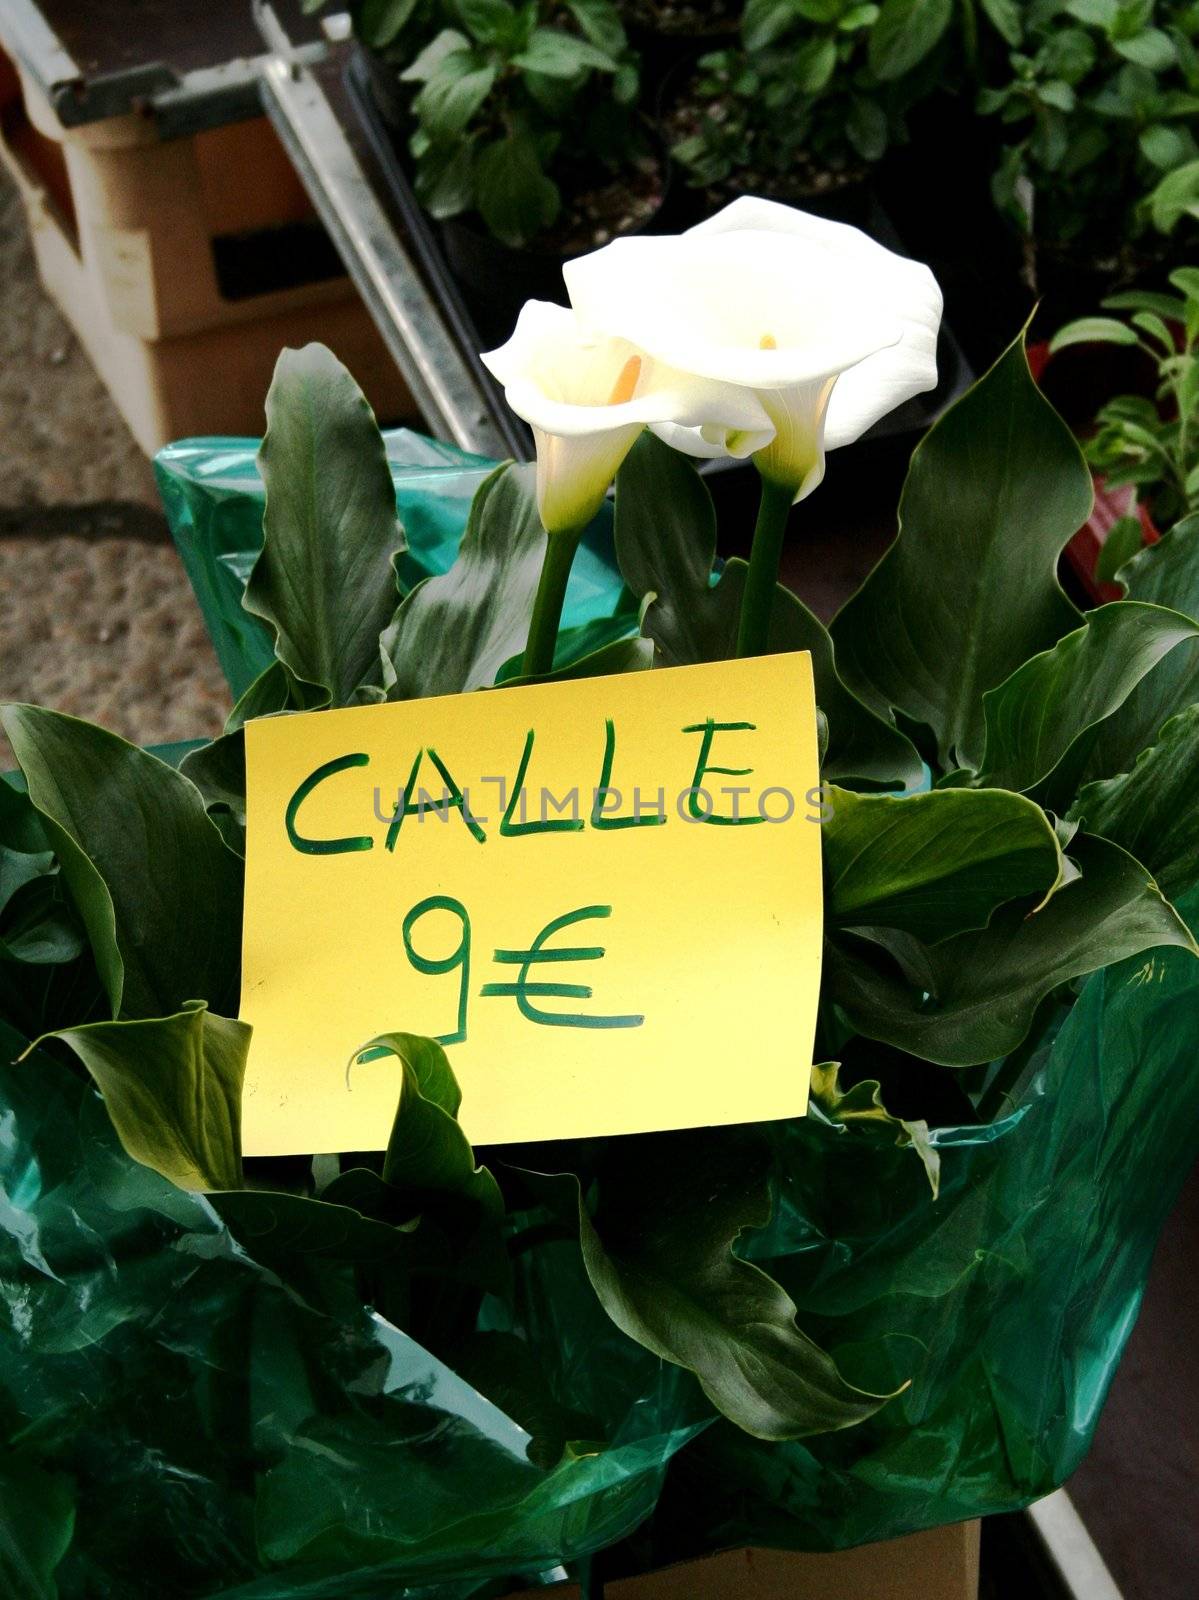 Flowers market by adrianocastelli